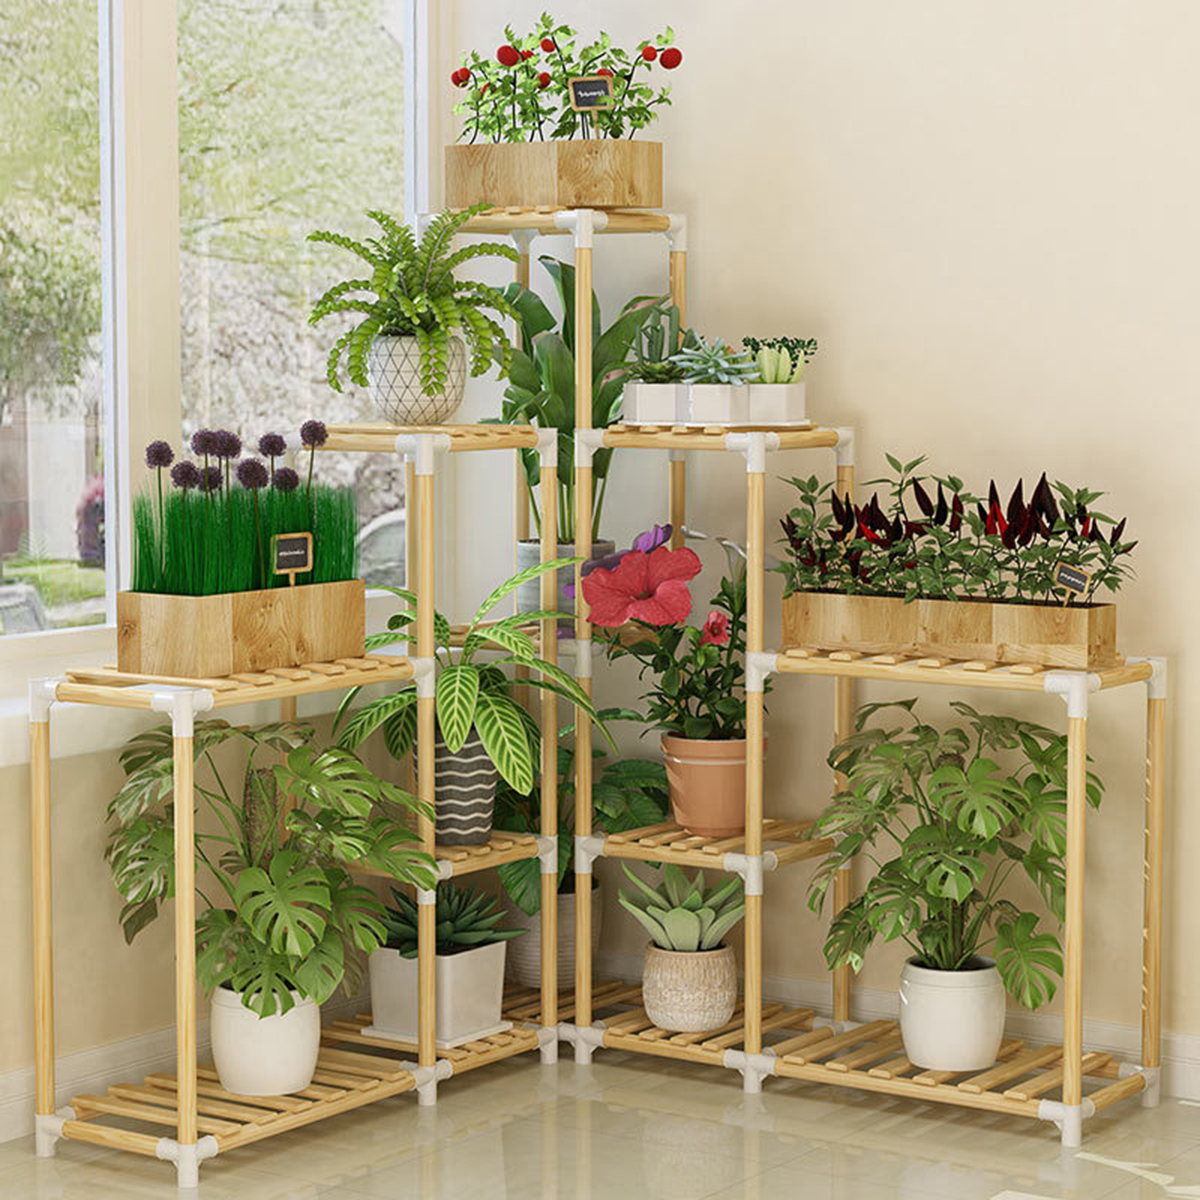 Multifuncitonal Wooden Plants Stand Follower Pot Organizer Shelf Garden Display Rack Holder for Garden Indoor Decor 6